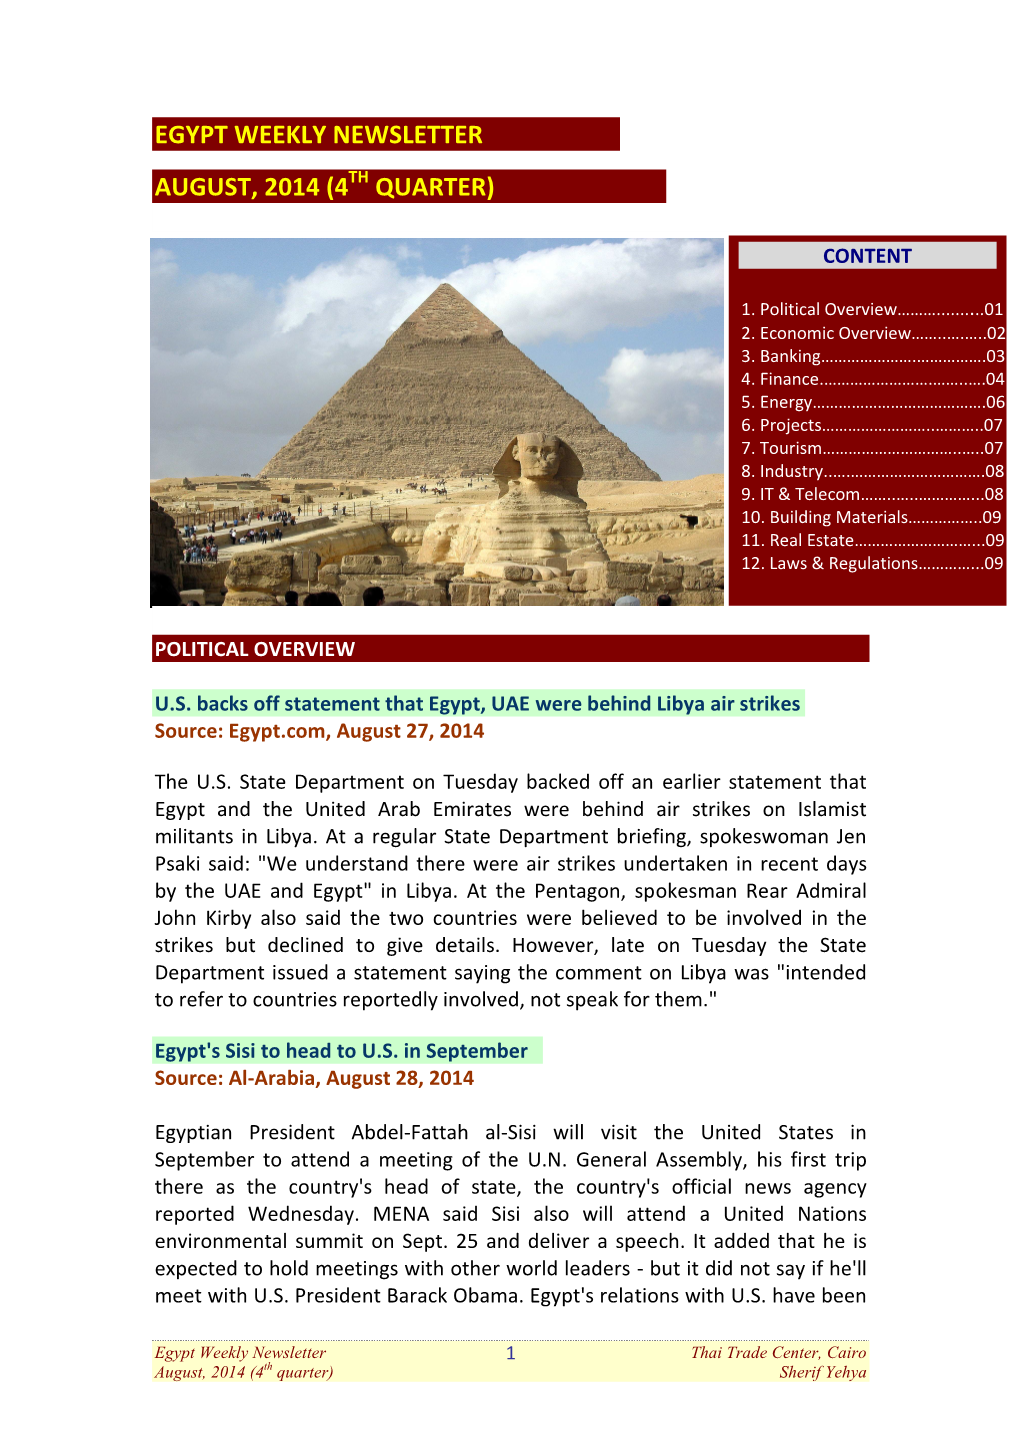 Egypt Weekly Newsletter August 2014, 4Th Quarter